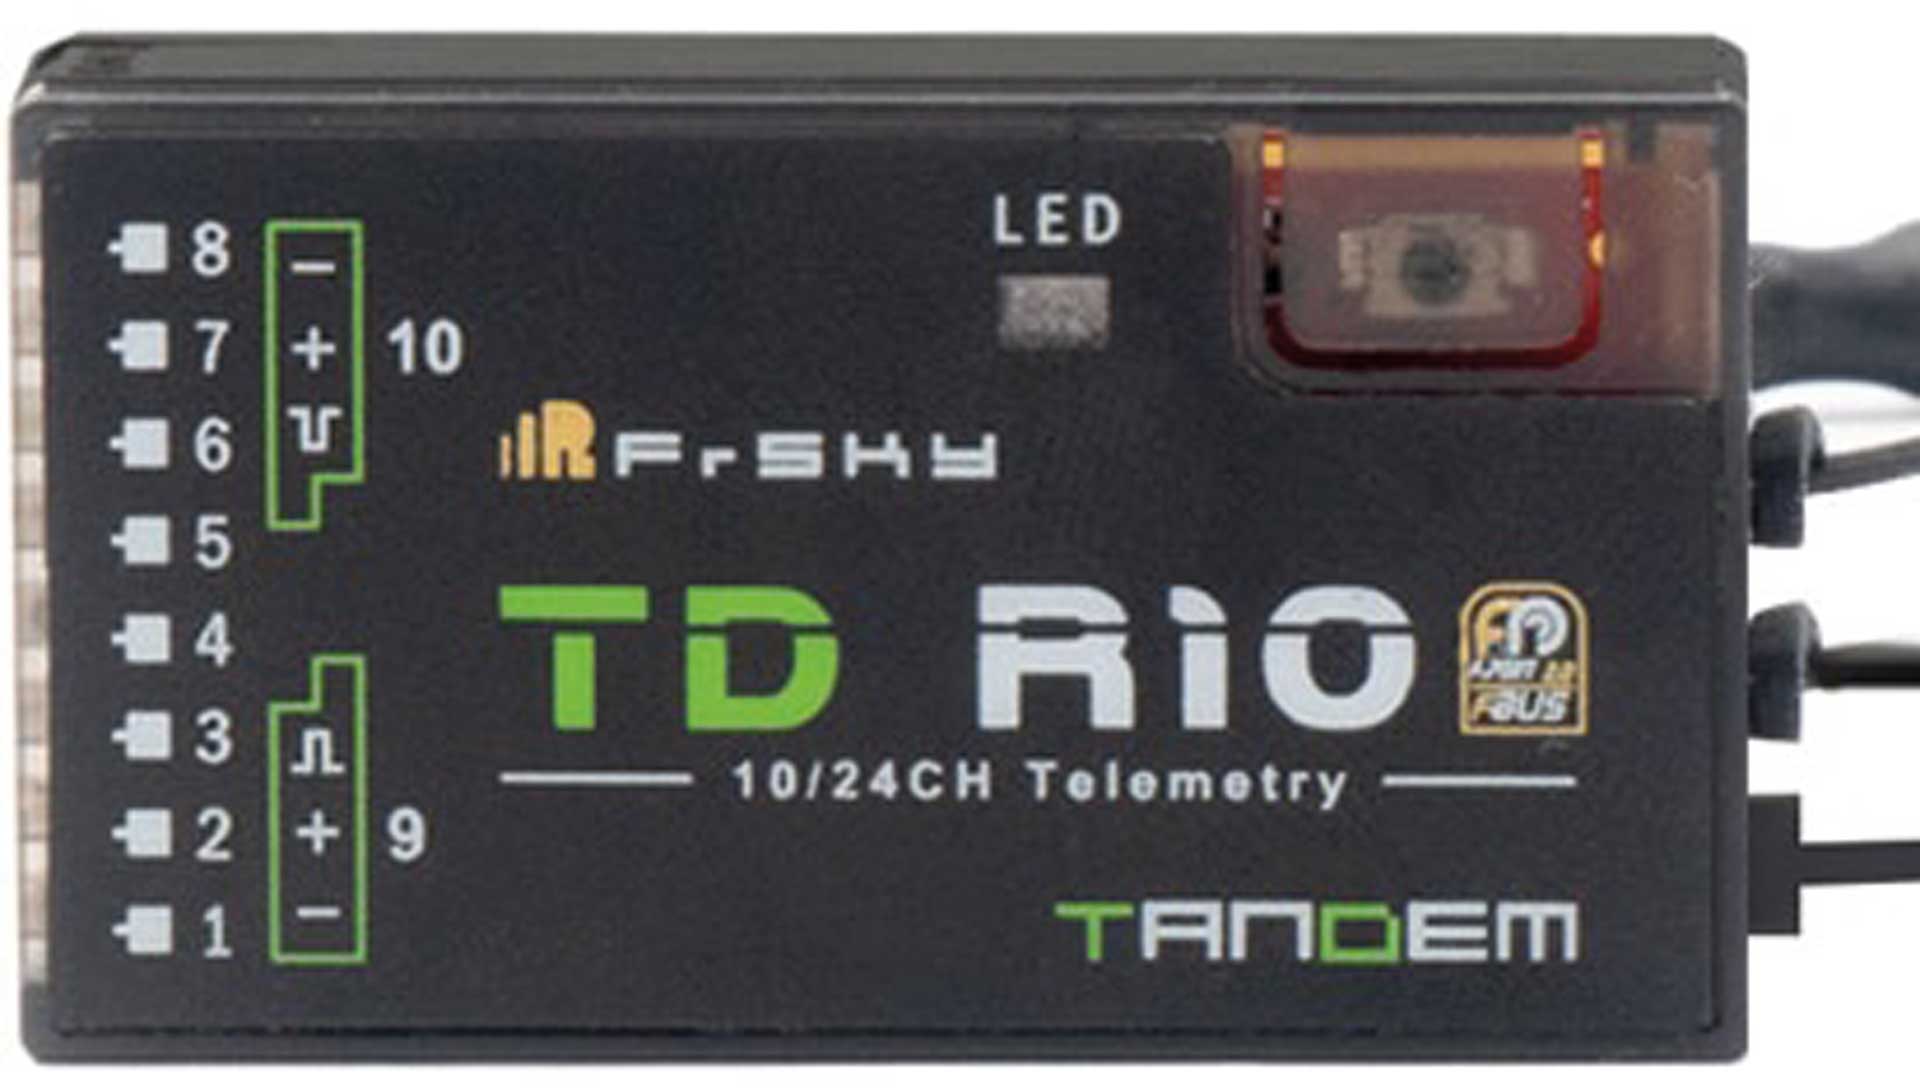 FrSky Tandem Empfänger TD-R10 2,4 GHz/868 MHz